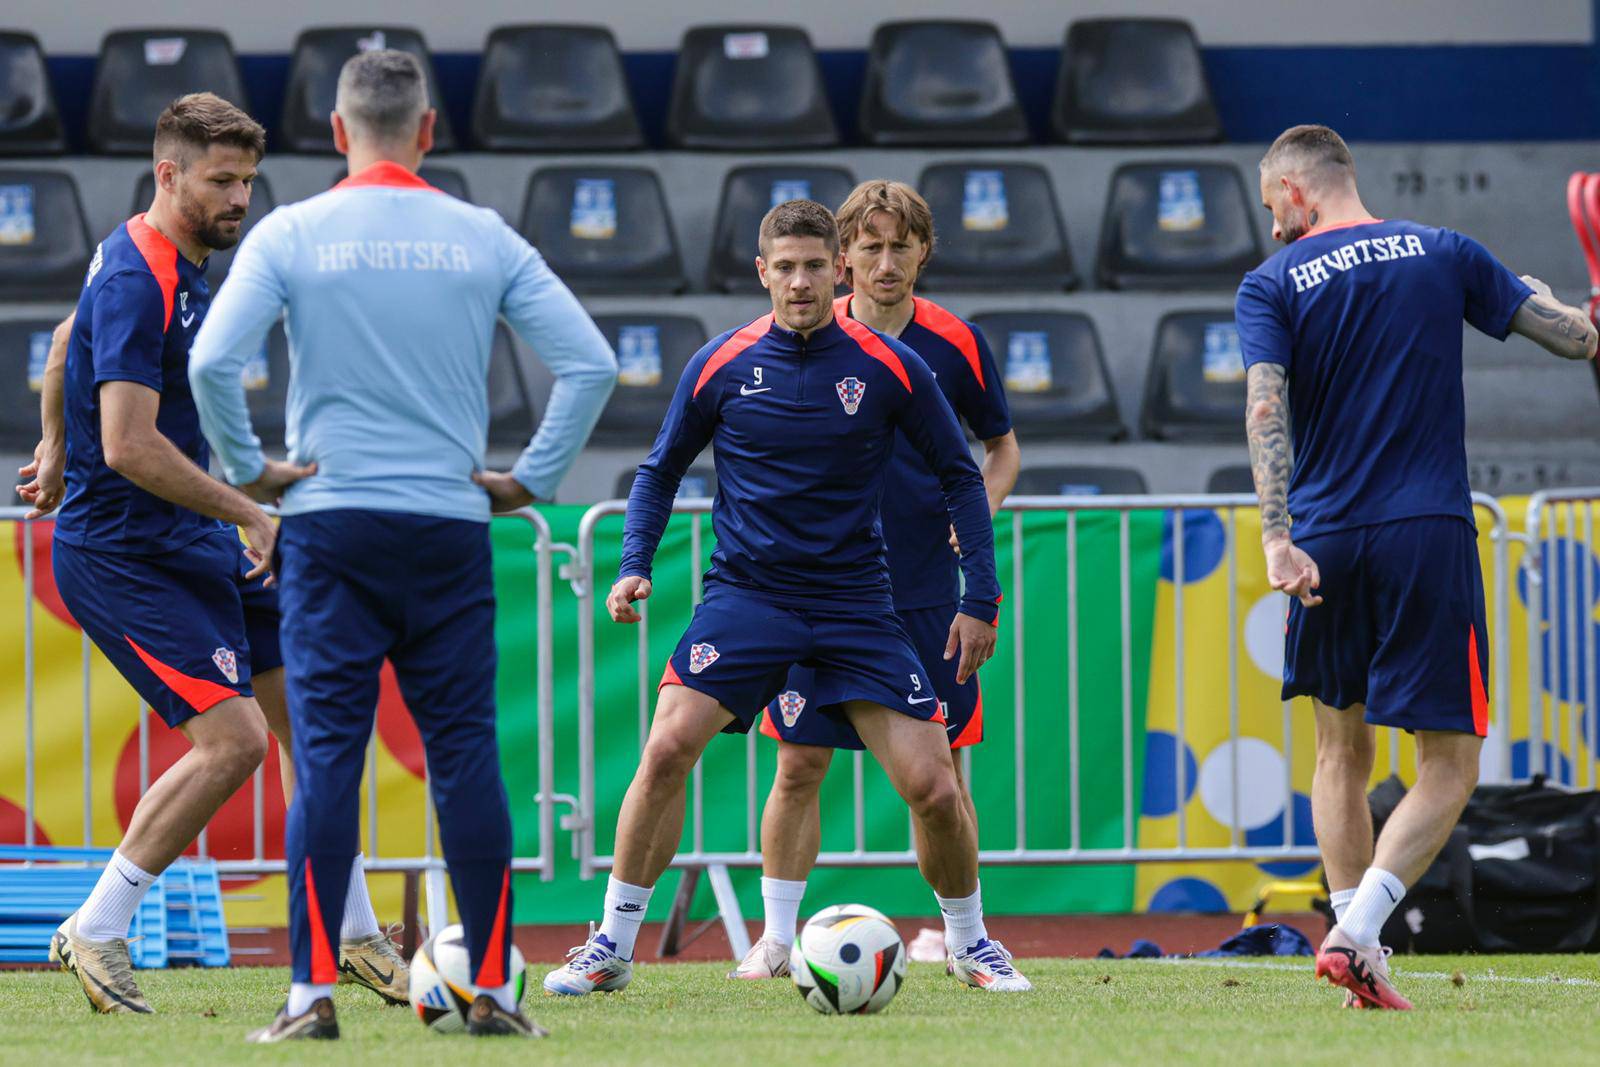 Neuruppin: Trening hrvatske nogometne reprezentacije uoči utakmice s Italijom 